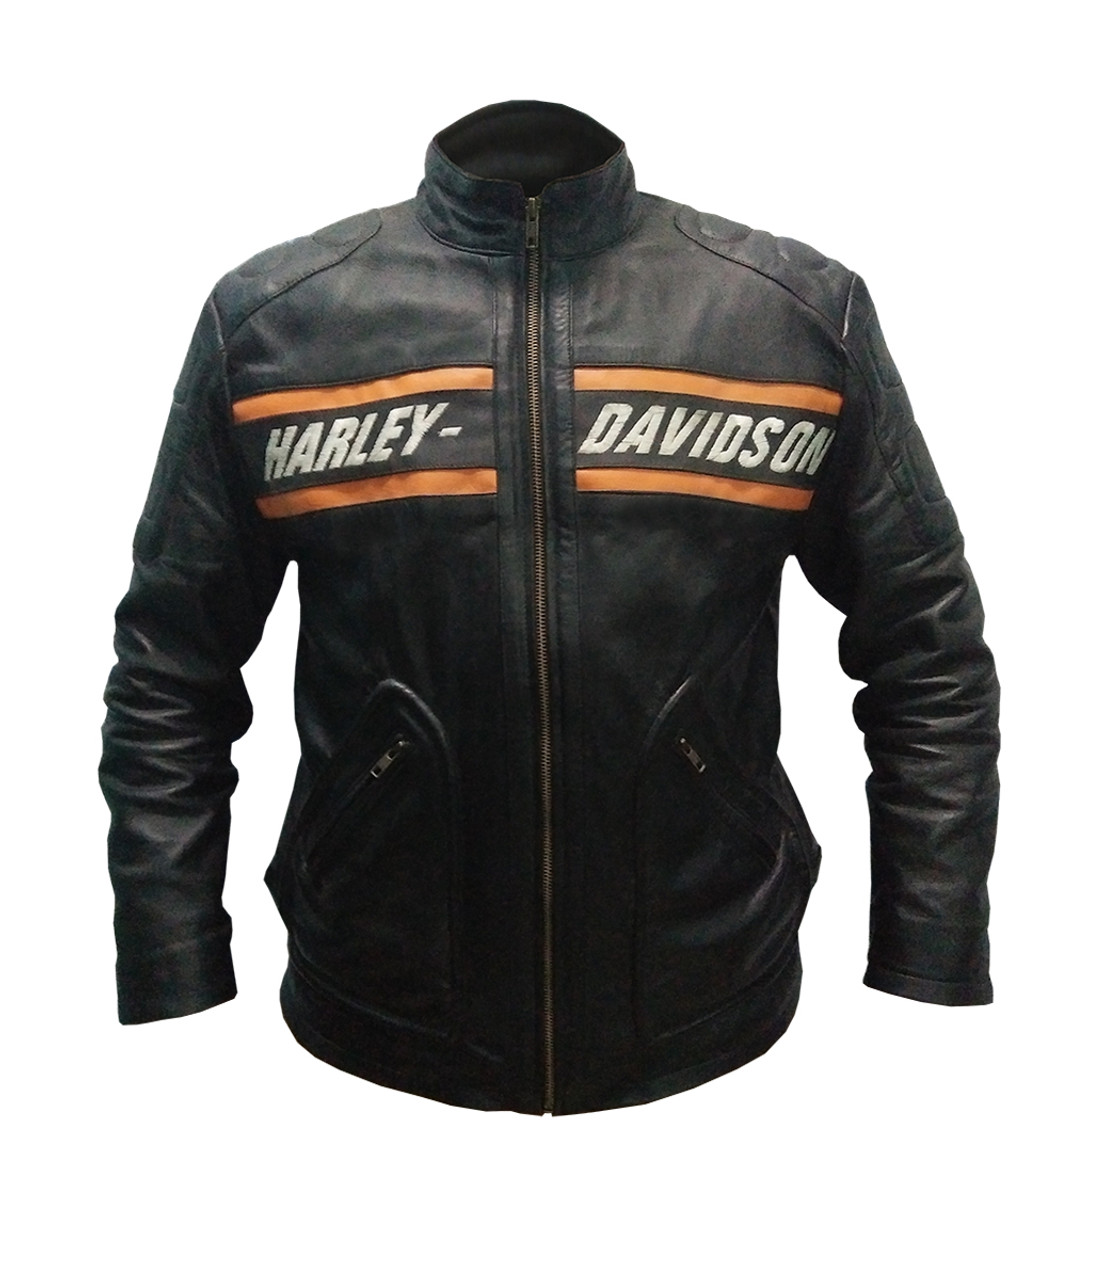 Bill Goldberg Harley Davidson Biker Leather Jacket In Black Feather Skin